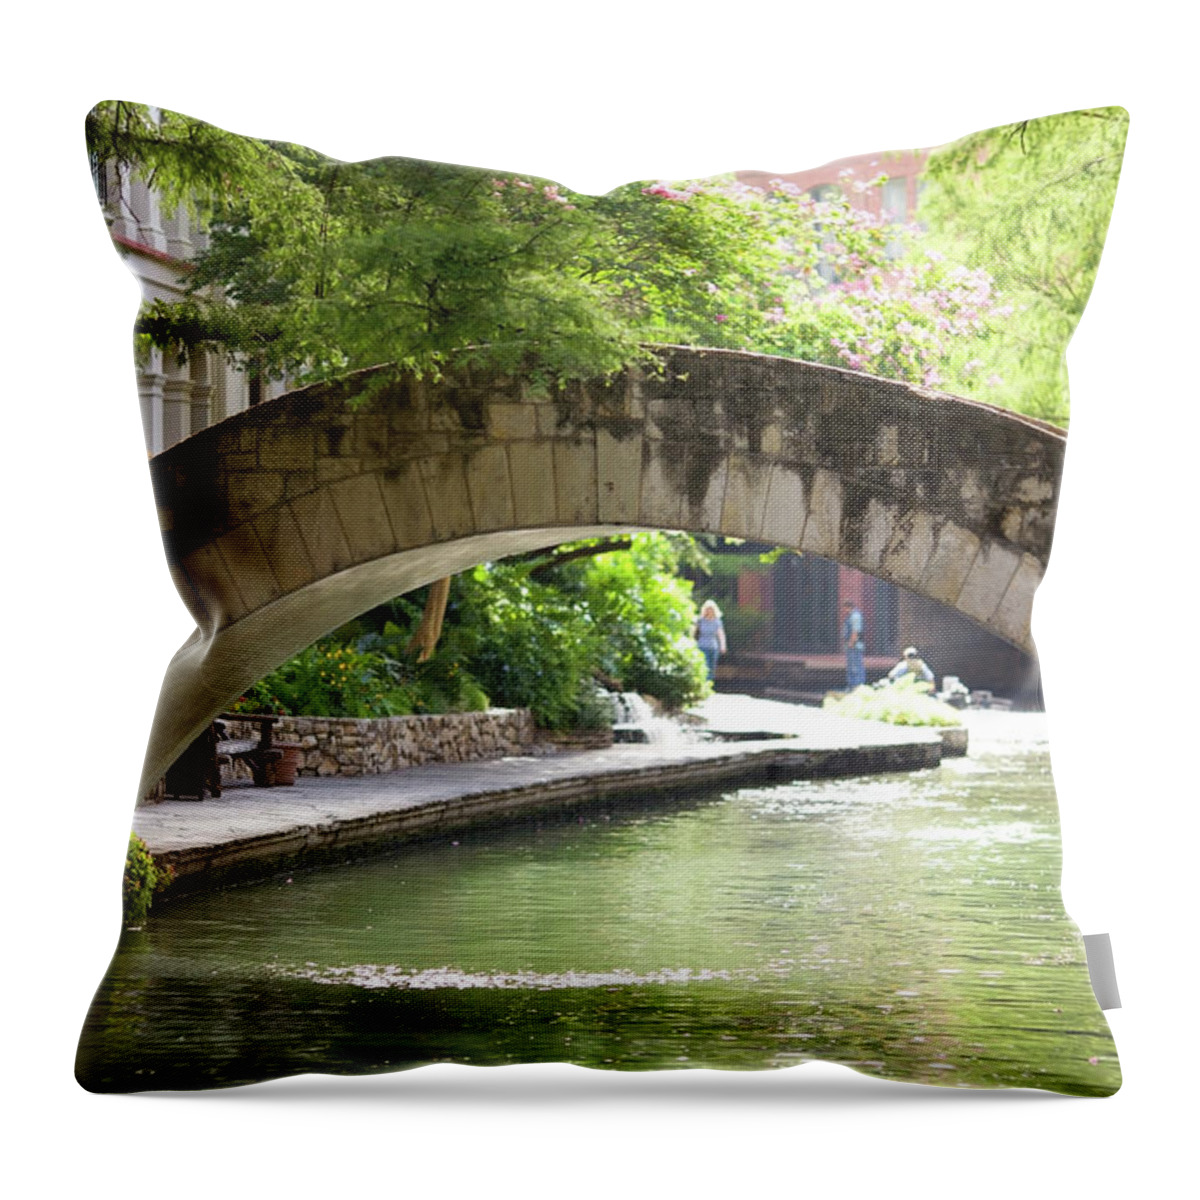 Water's Edge Throw Pillow featuring the photograph Riverwalk Stone Arch Bridge by Samdiesel